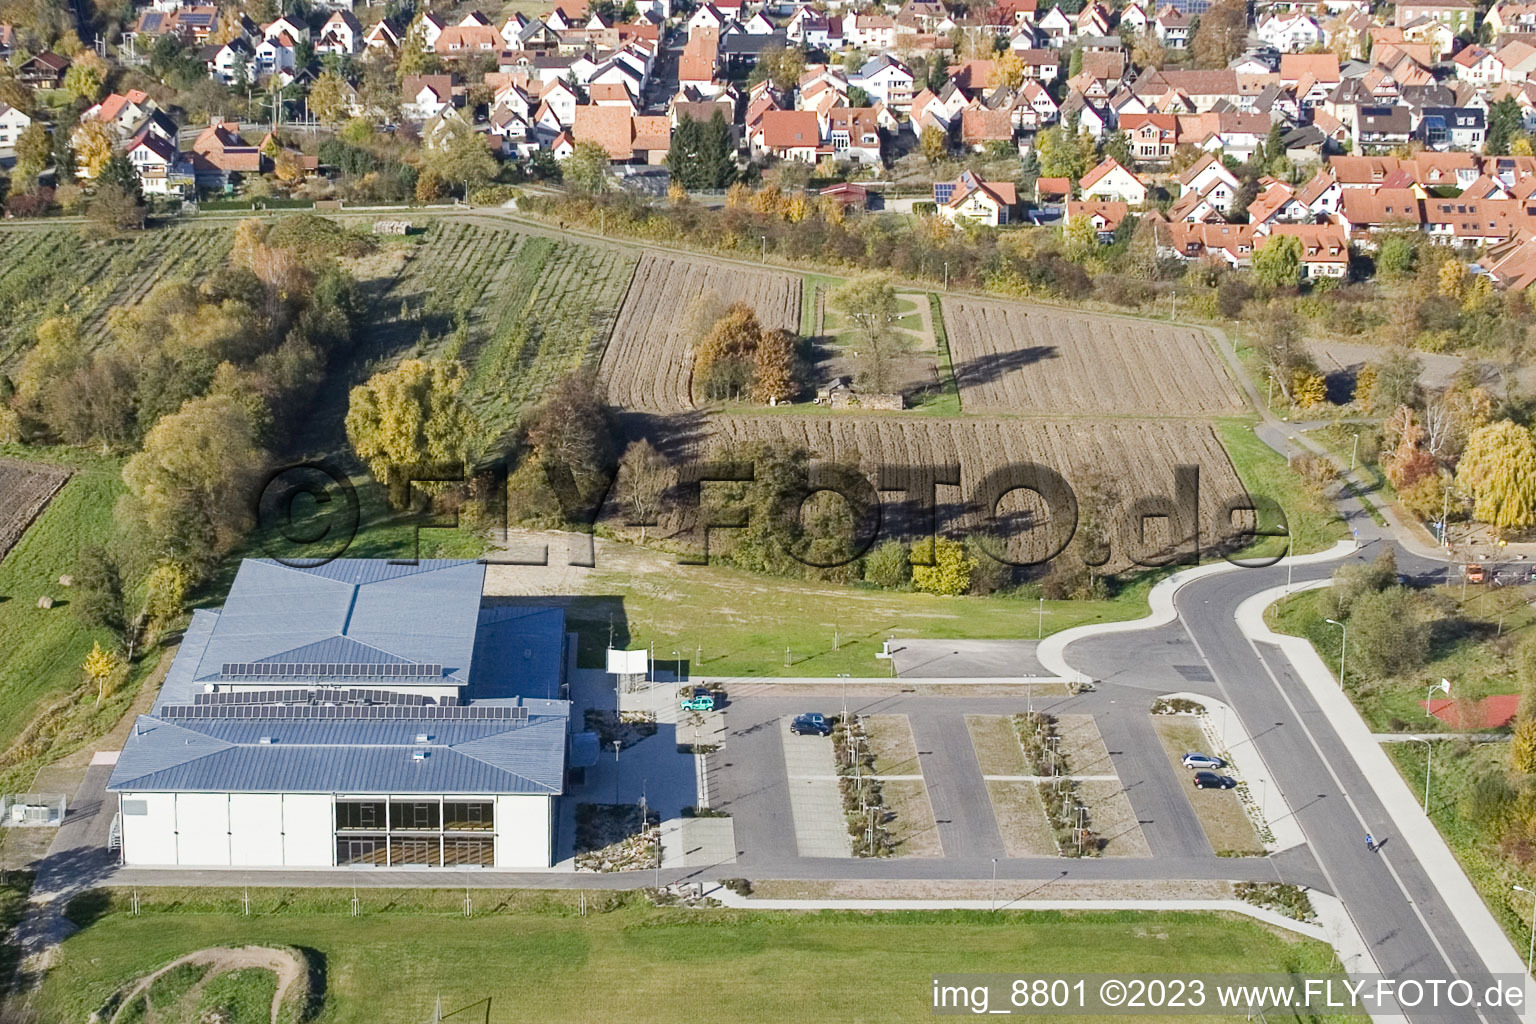 Aerial view of Bienwaldhalle in Kandel in the state Rhineland-Palatinate, Germany